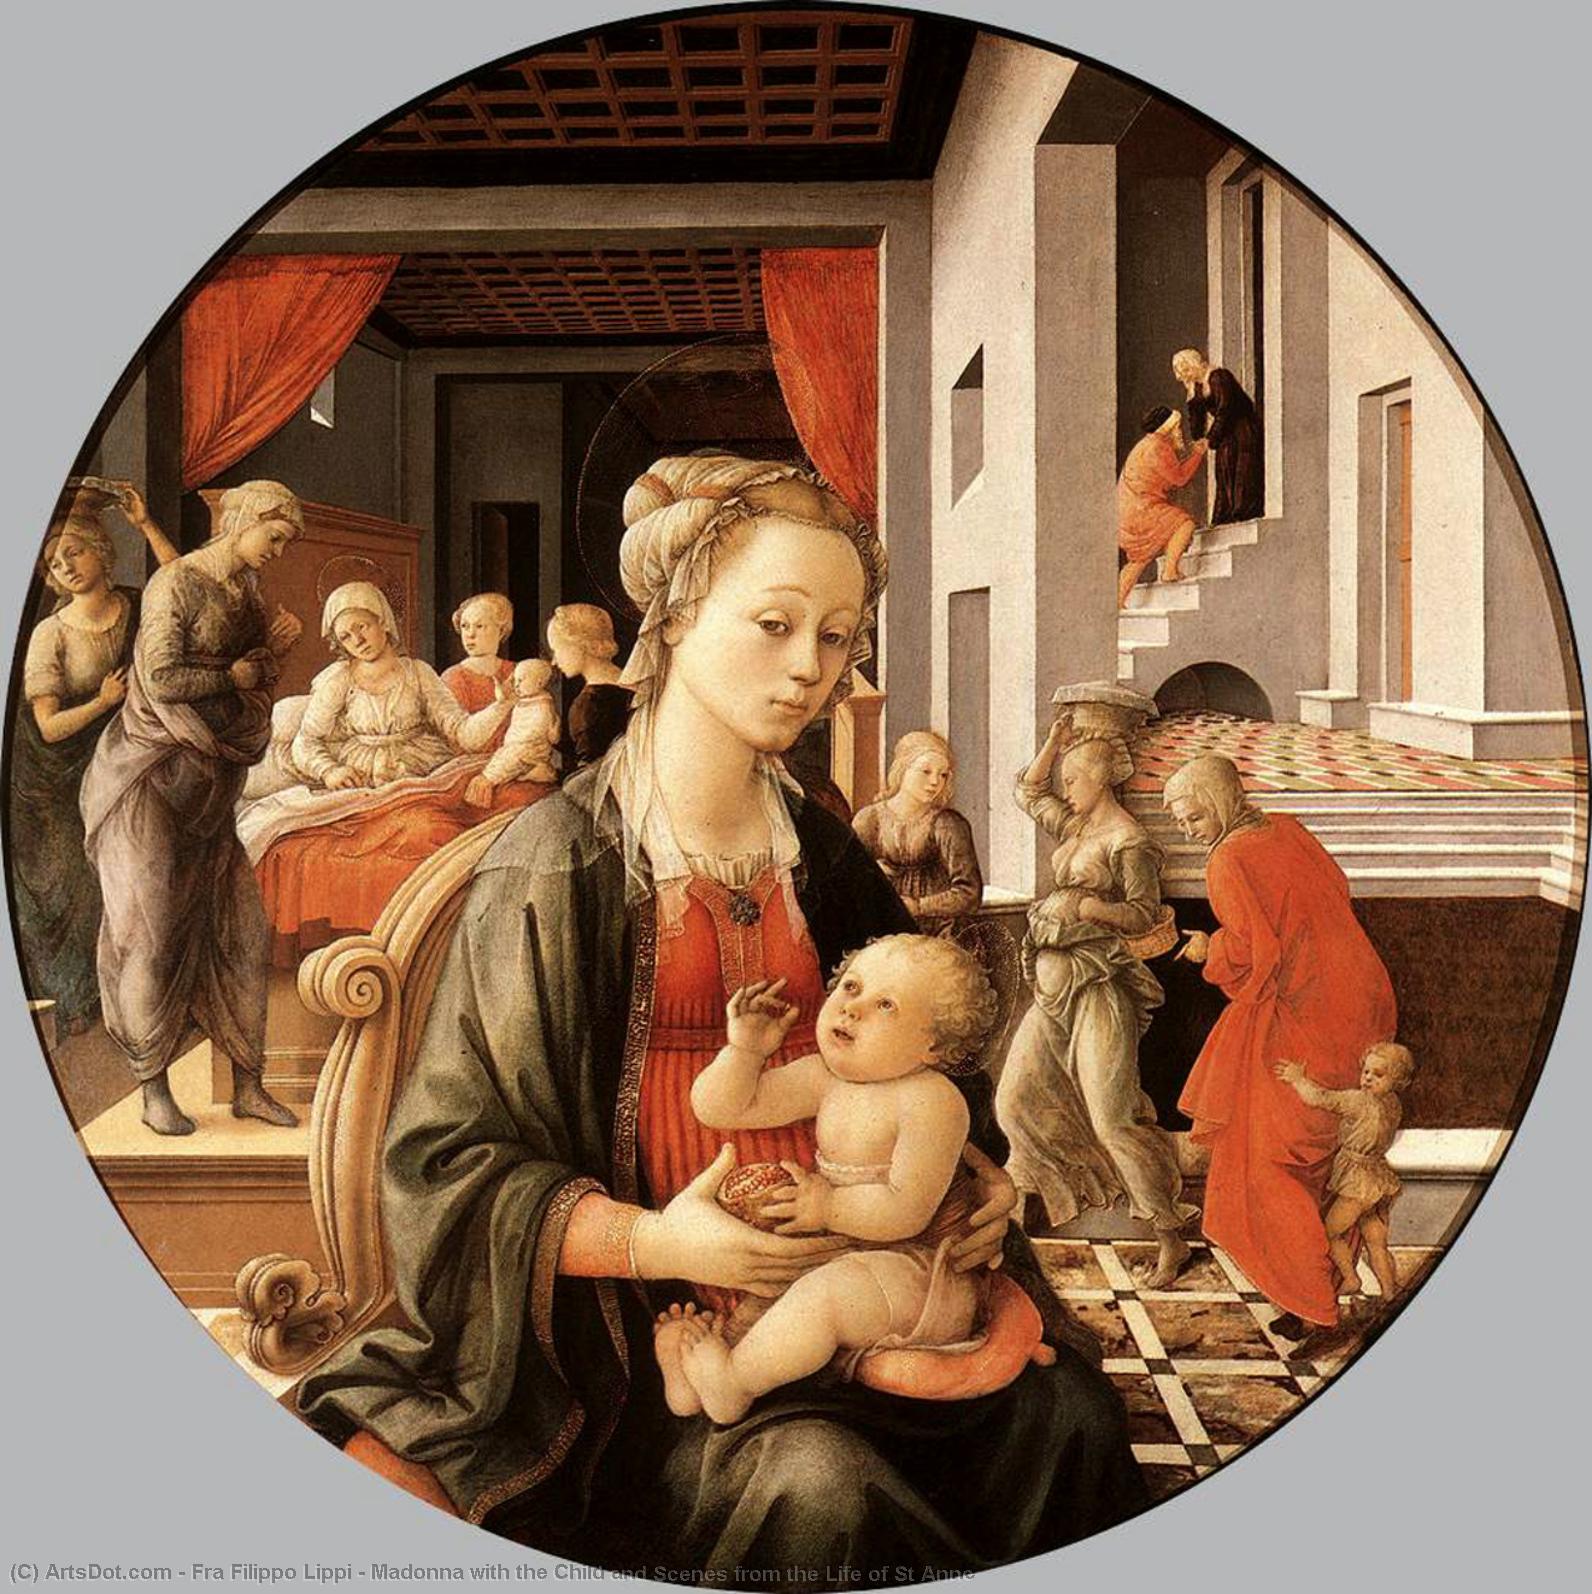 Wikioo.org - Bách khoa toàn thư về mỹ thuật - Vẽ tranh, Tác phẩm nghệ thuật Fra Filippo Lippi - Madonna with the Child and Scenes from the Life of St Anne